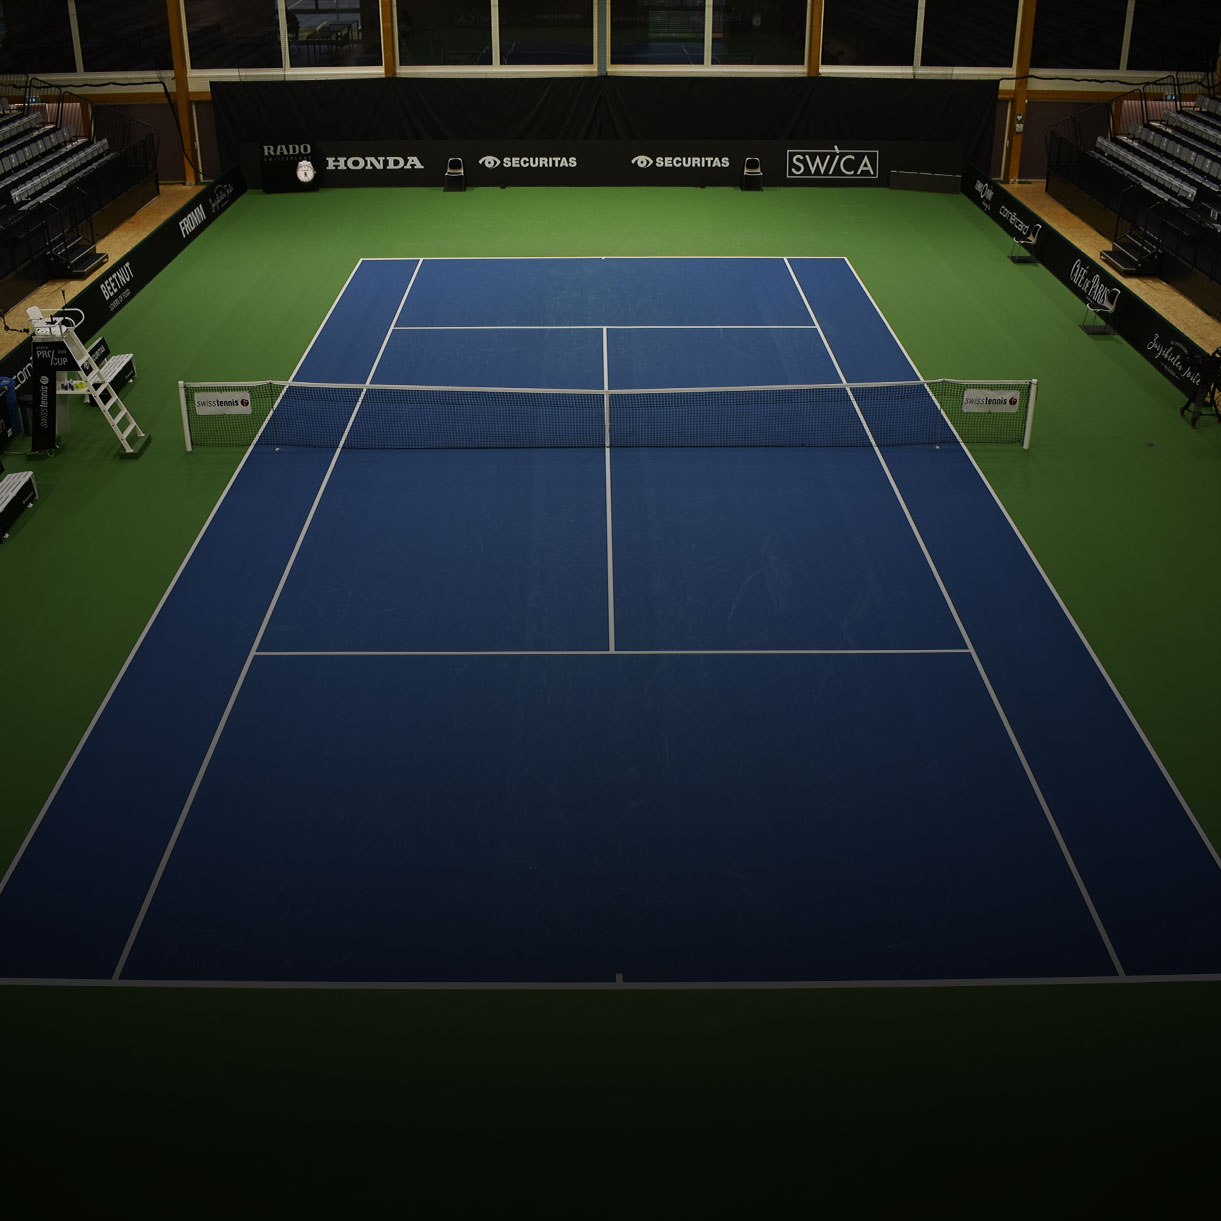 Swiss Tennis Pro Cup 2020